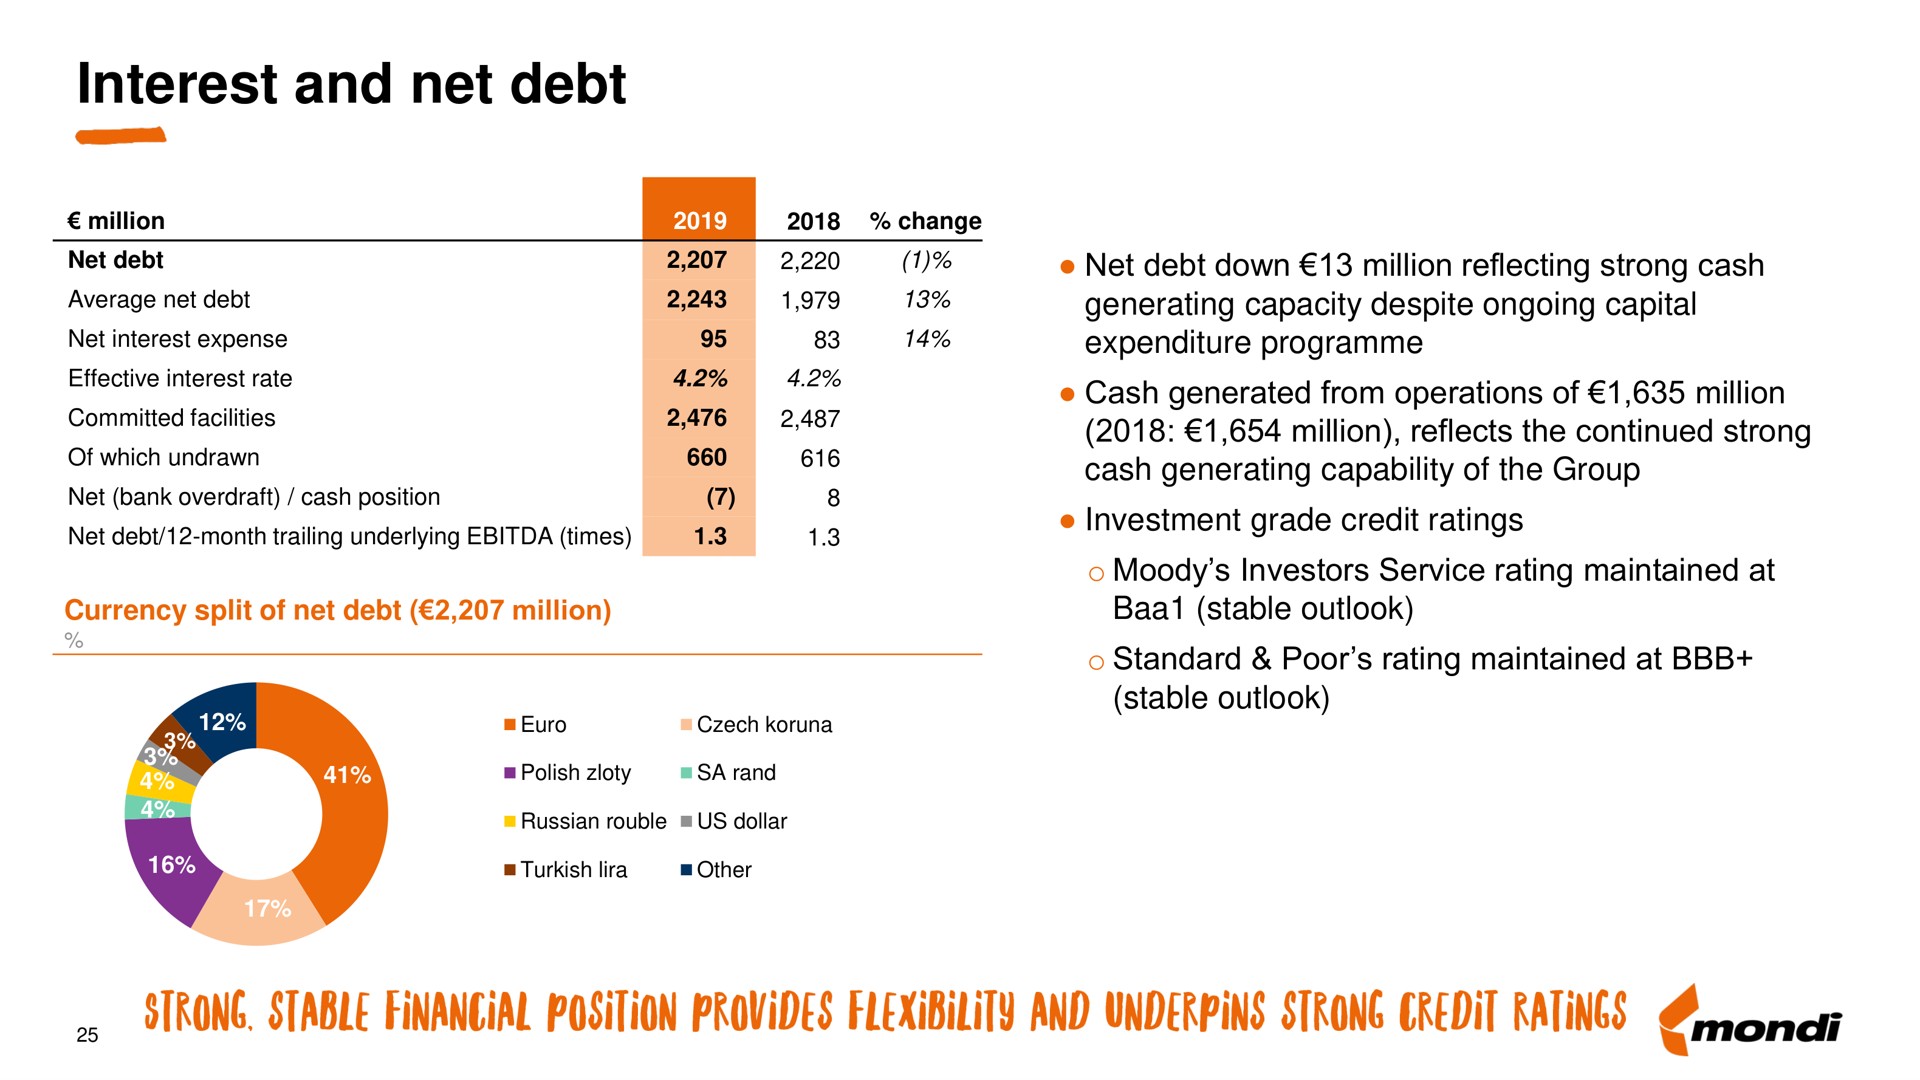 interest and net debt | Mondi